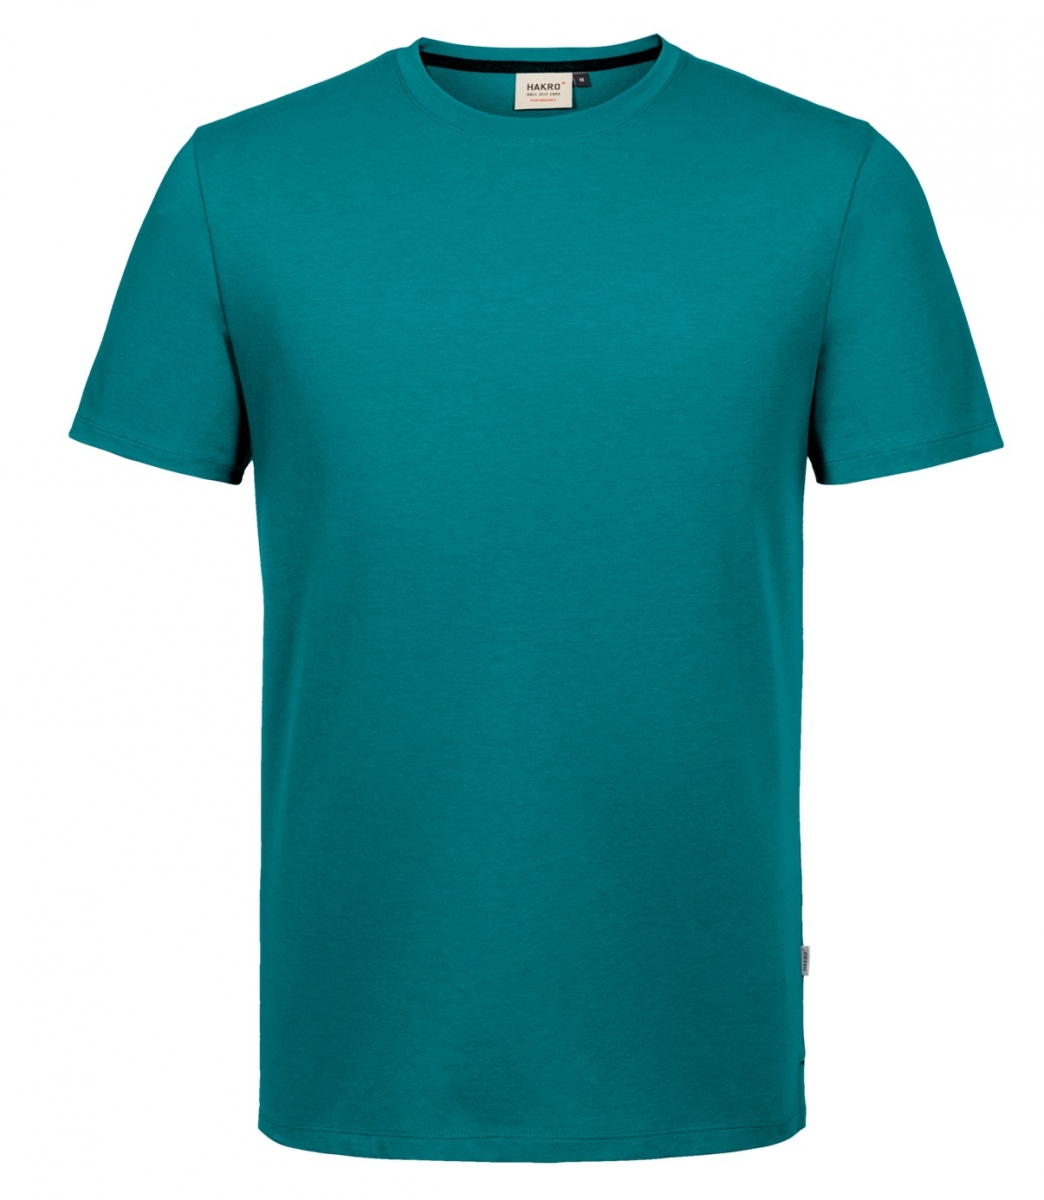 HAKRO-Worker-Shirts, T-Shirt, Cotton-Tec, 185 g / m smaragd